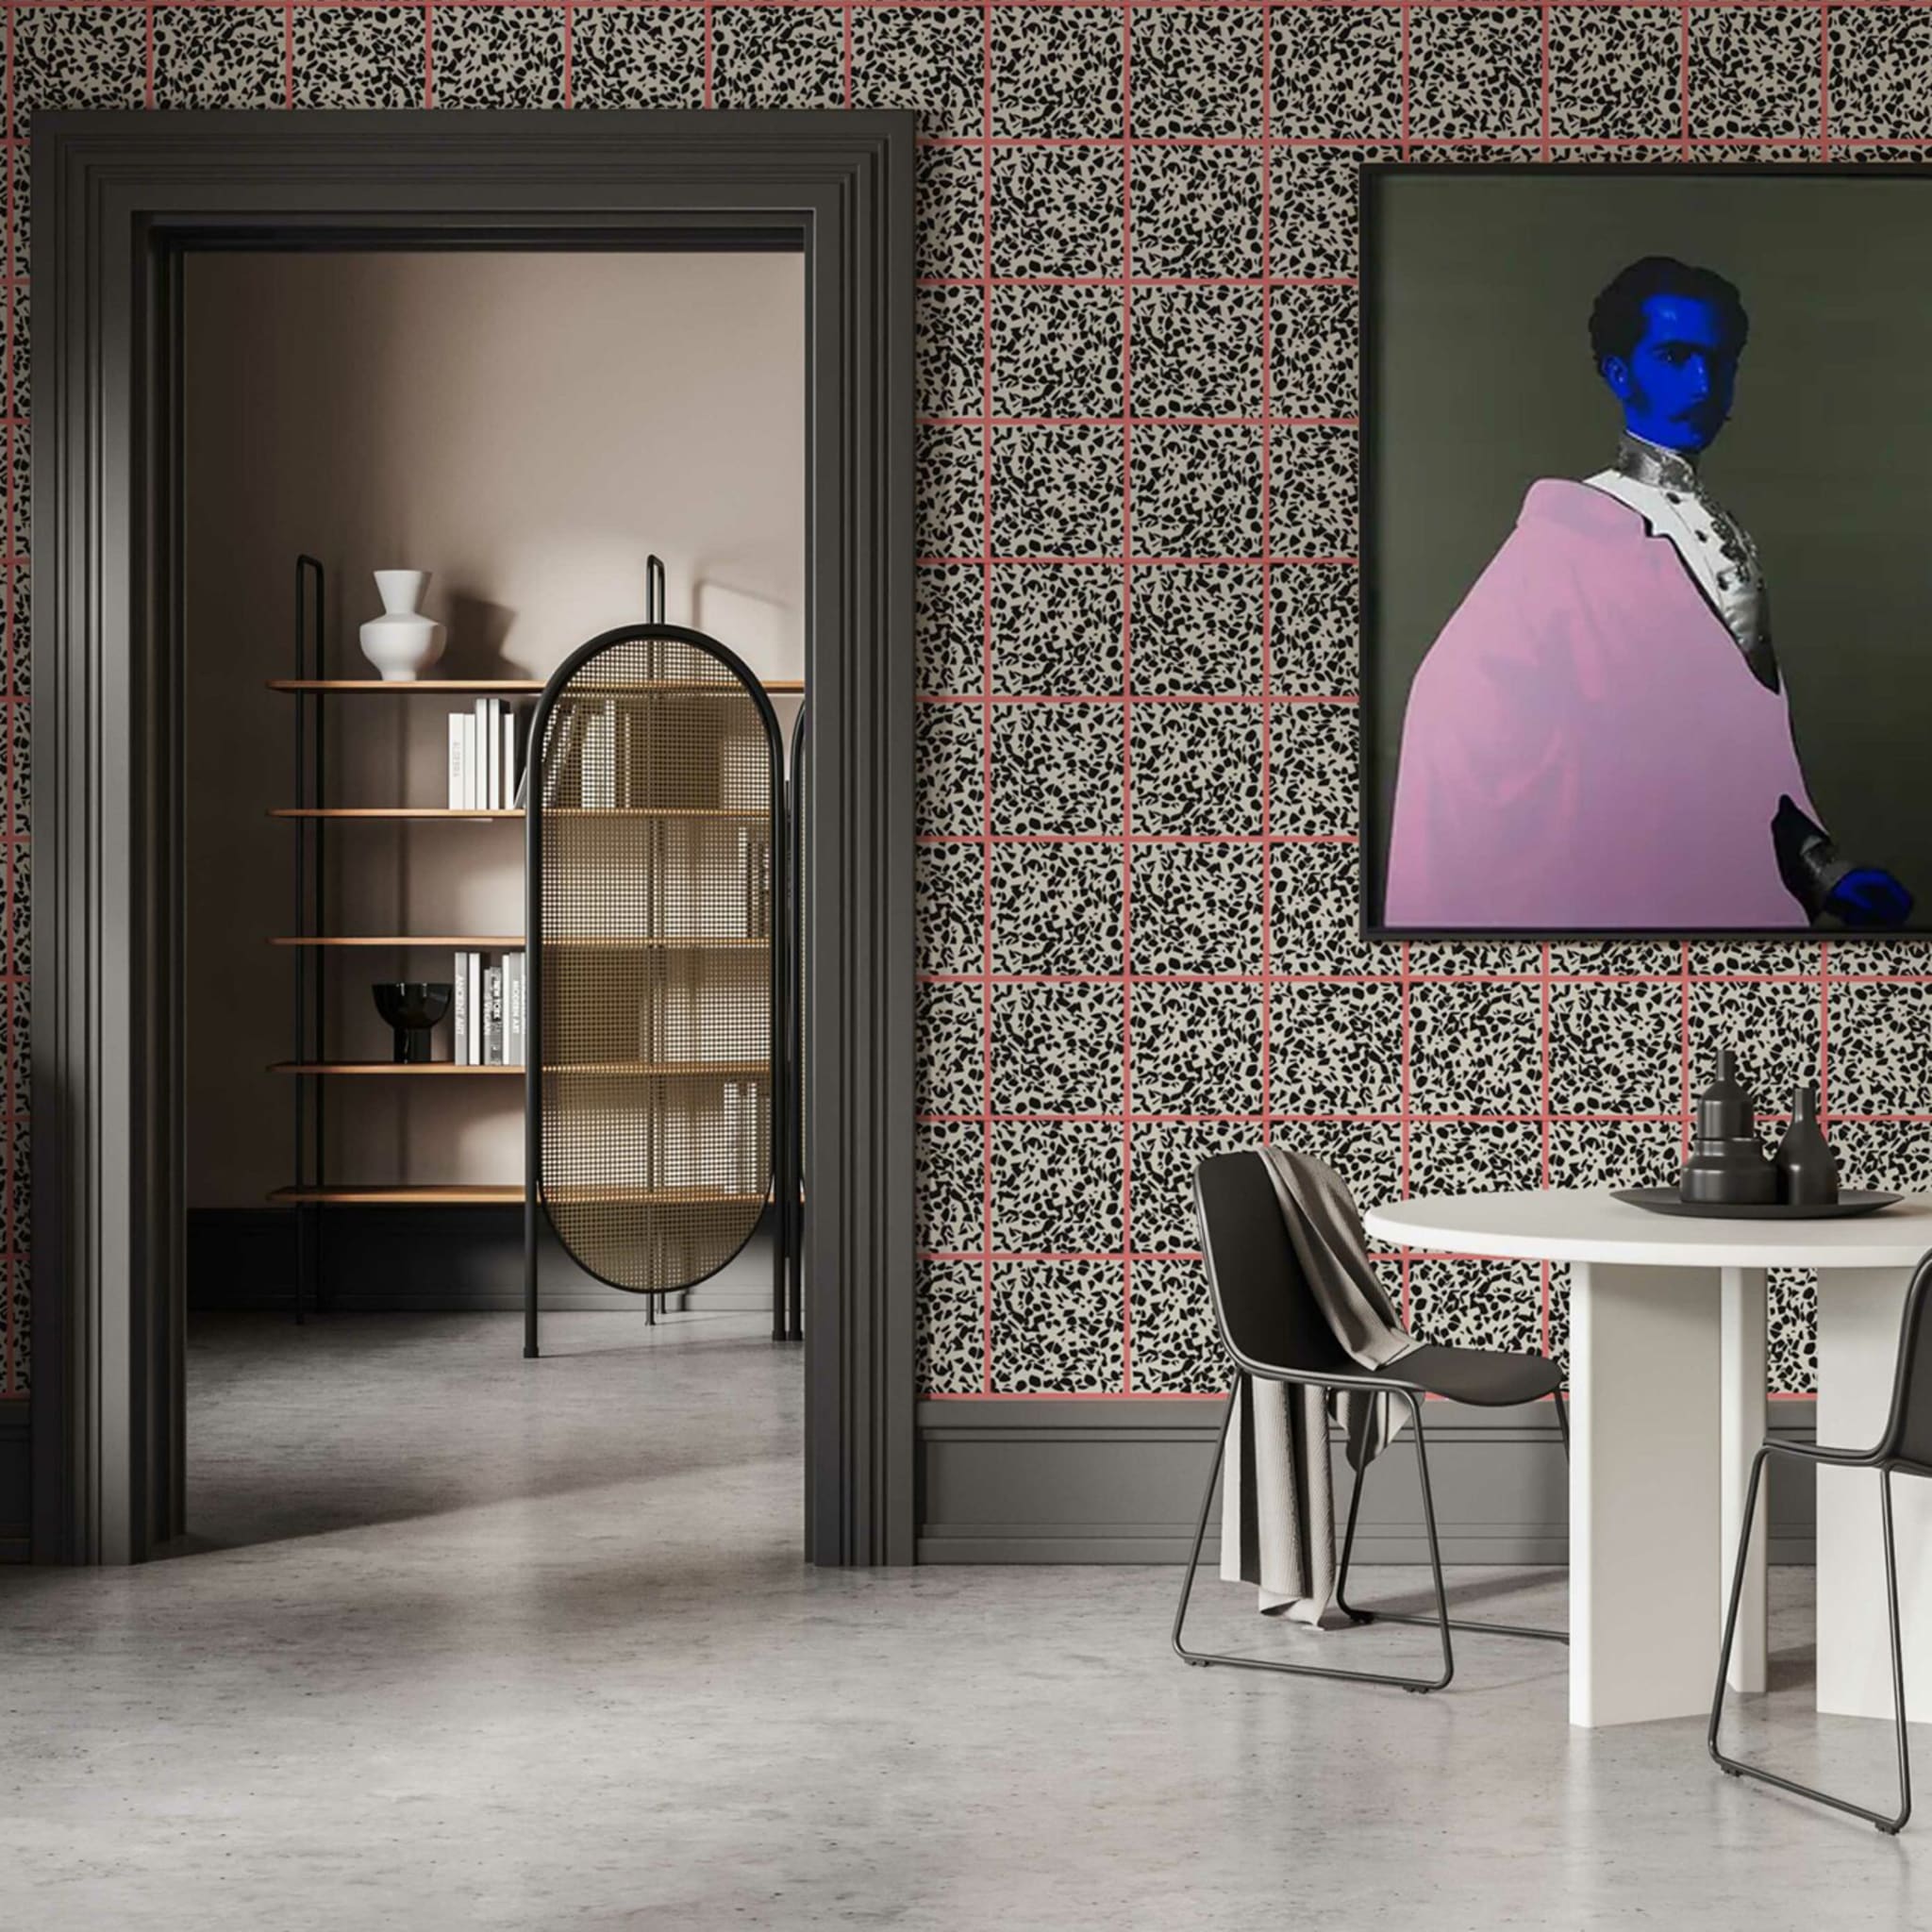 Fuga Fragola Wallpaper by Studio Lievito - Alternative view 2